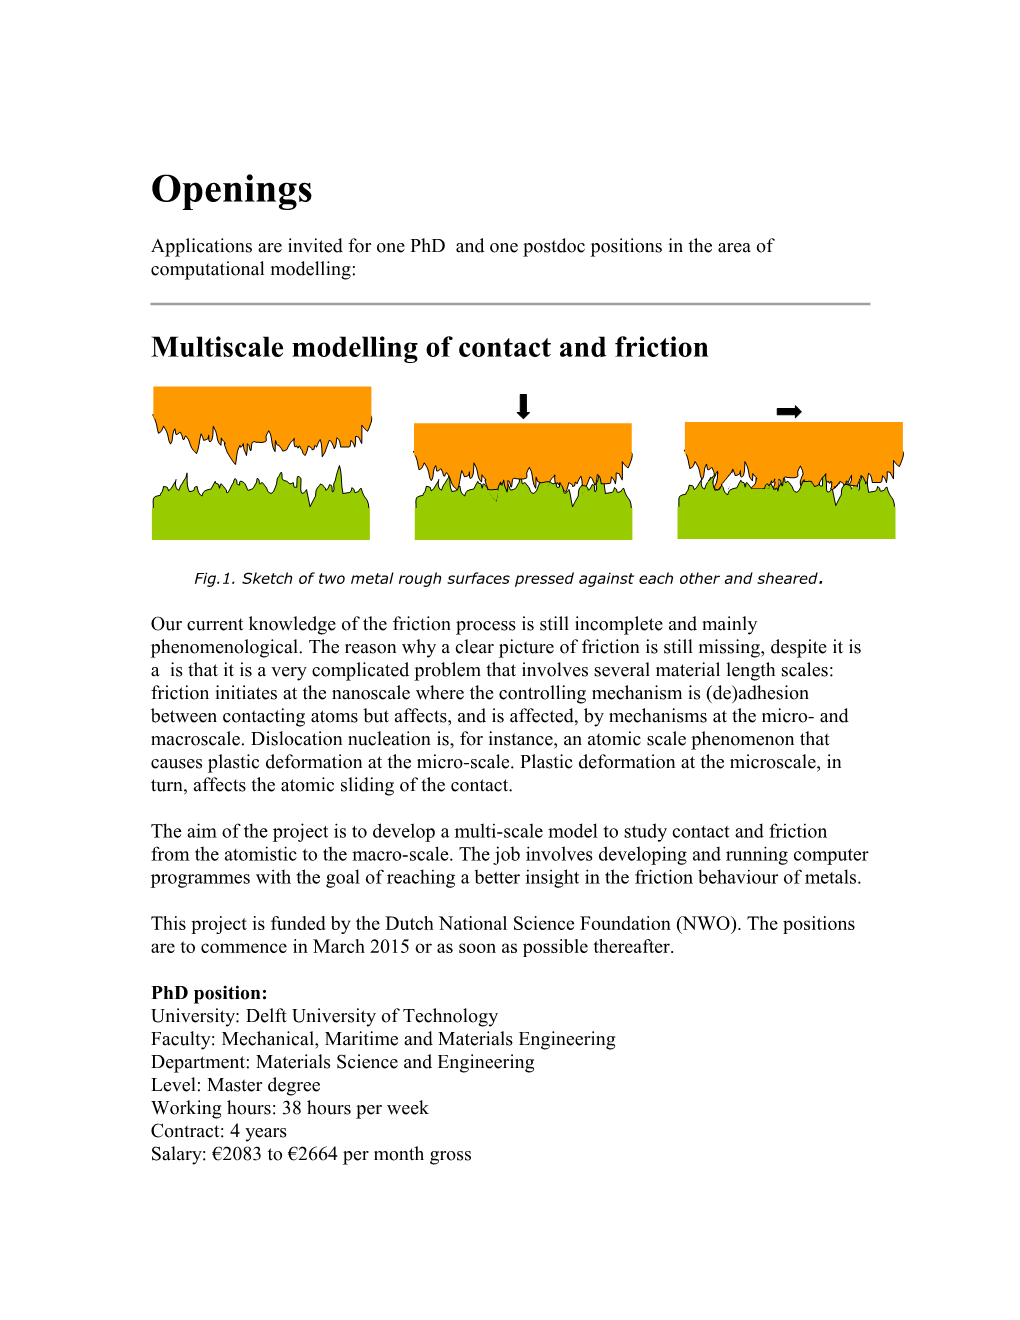 MODELING of METAL NANOIMPRINTING (1 Phd Position)